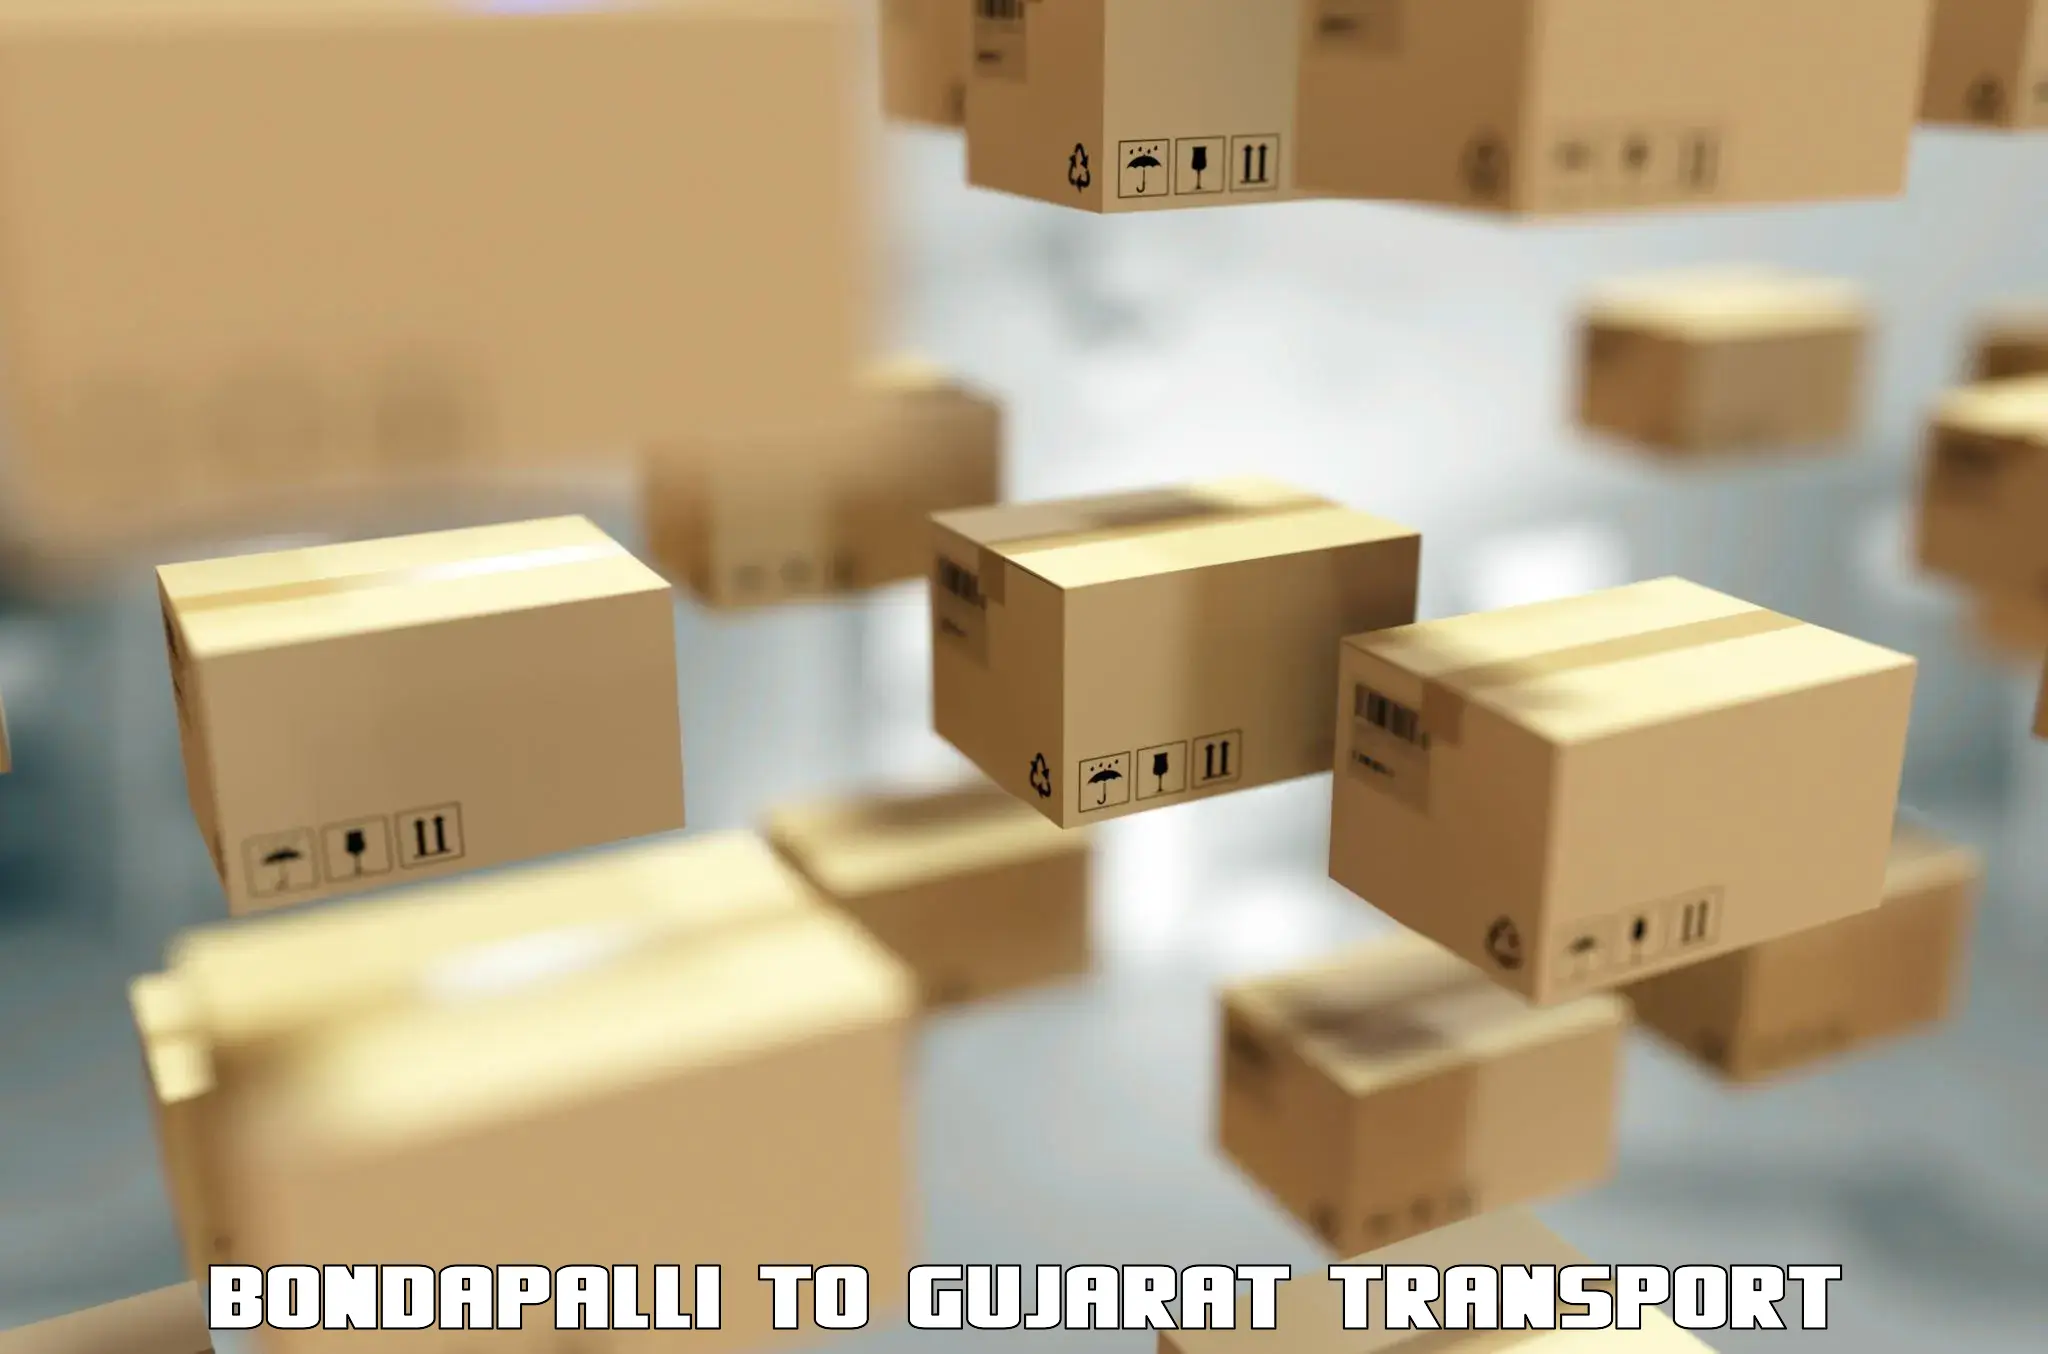 Daily transport service Bondapalli to NIT Surat